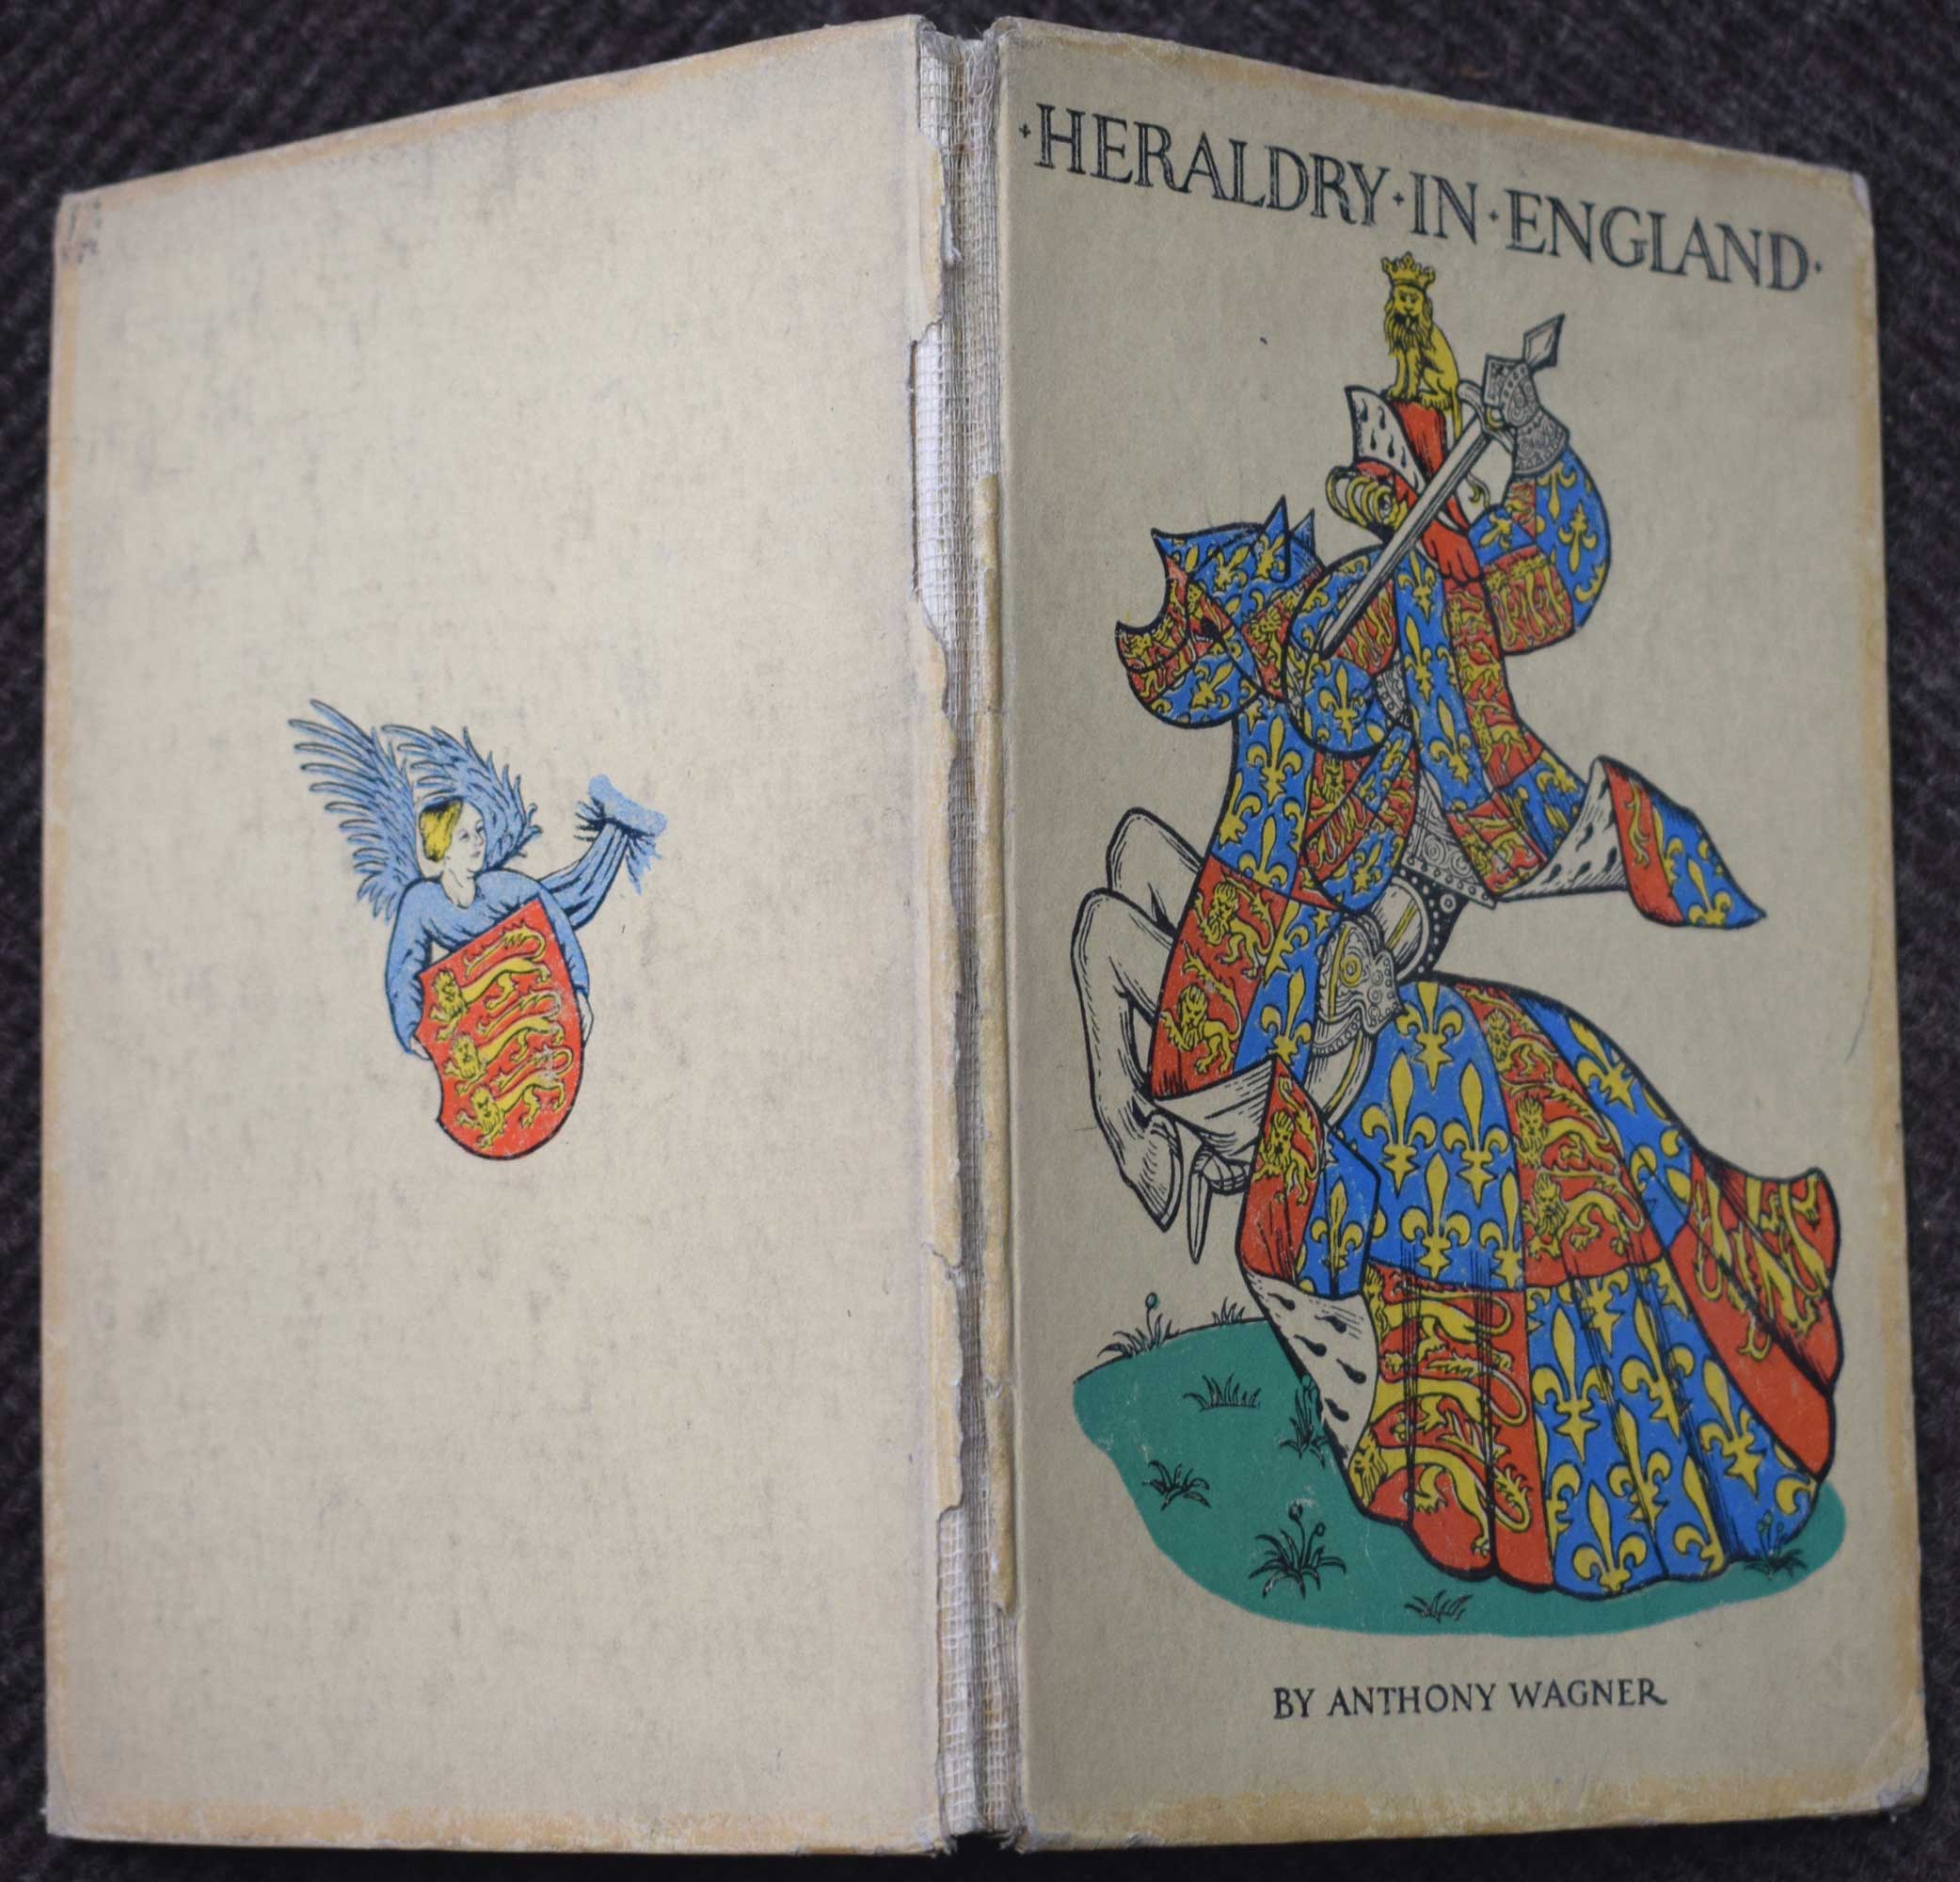 Heraldry in England. King Penguin No. 22.